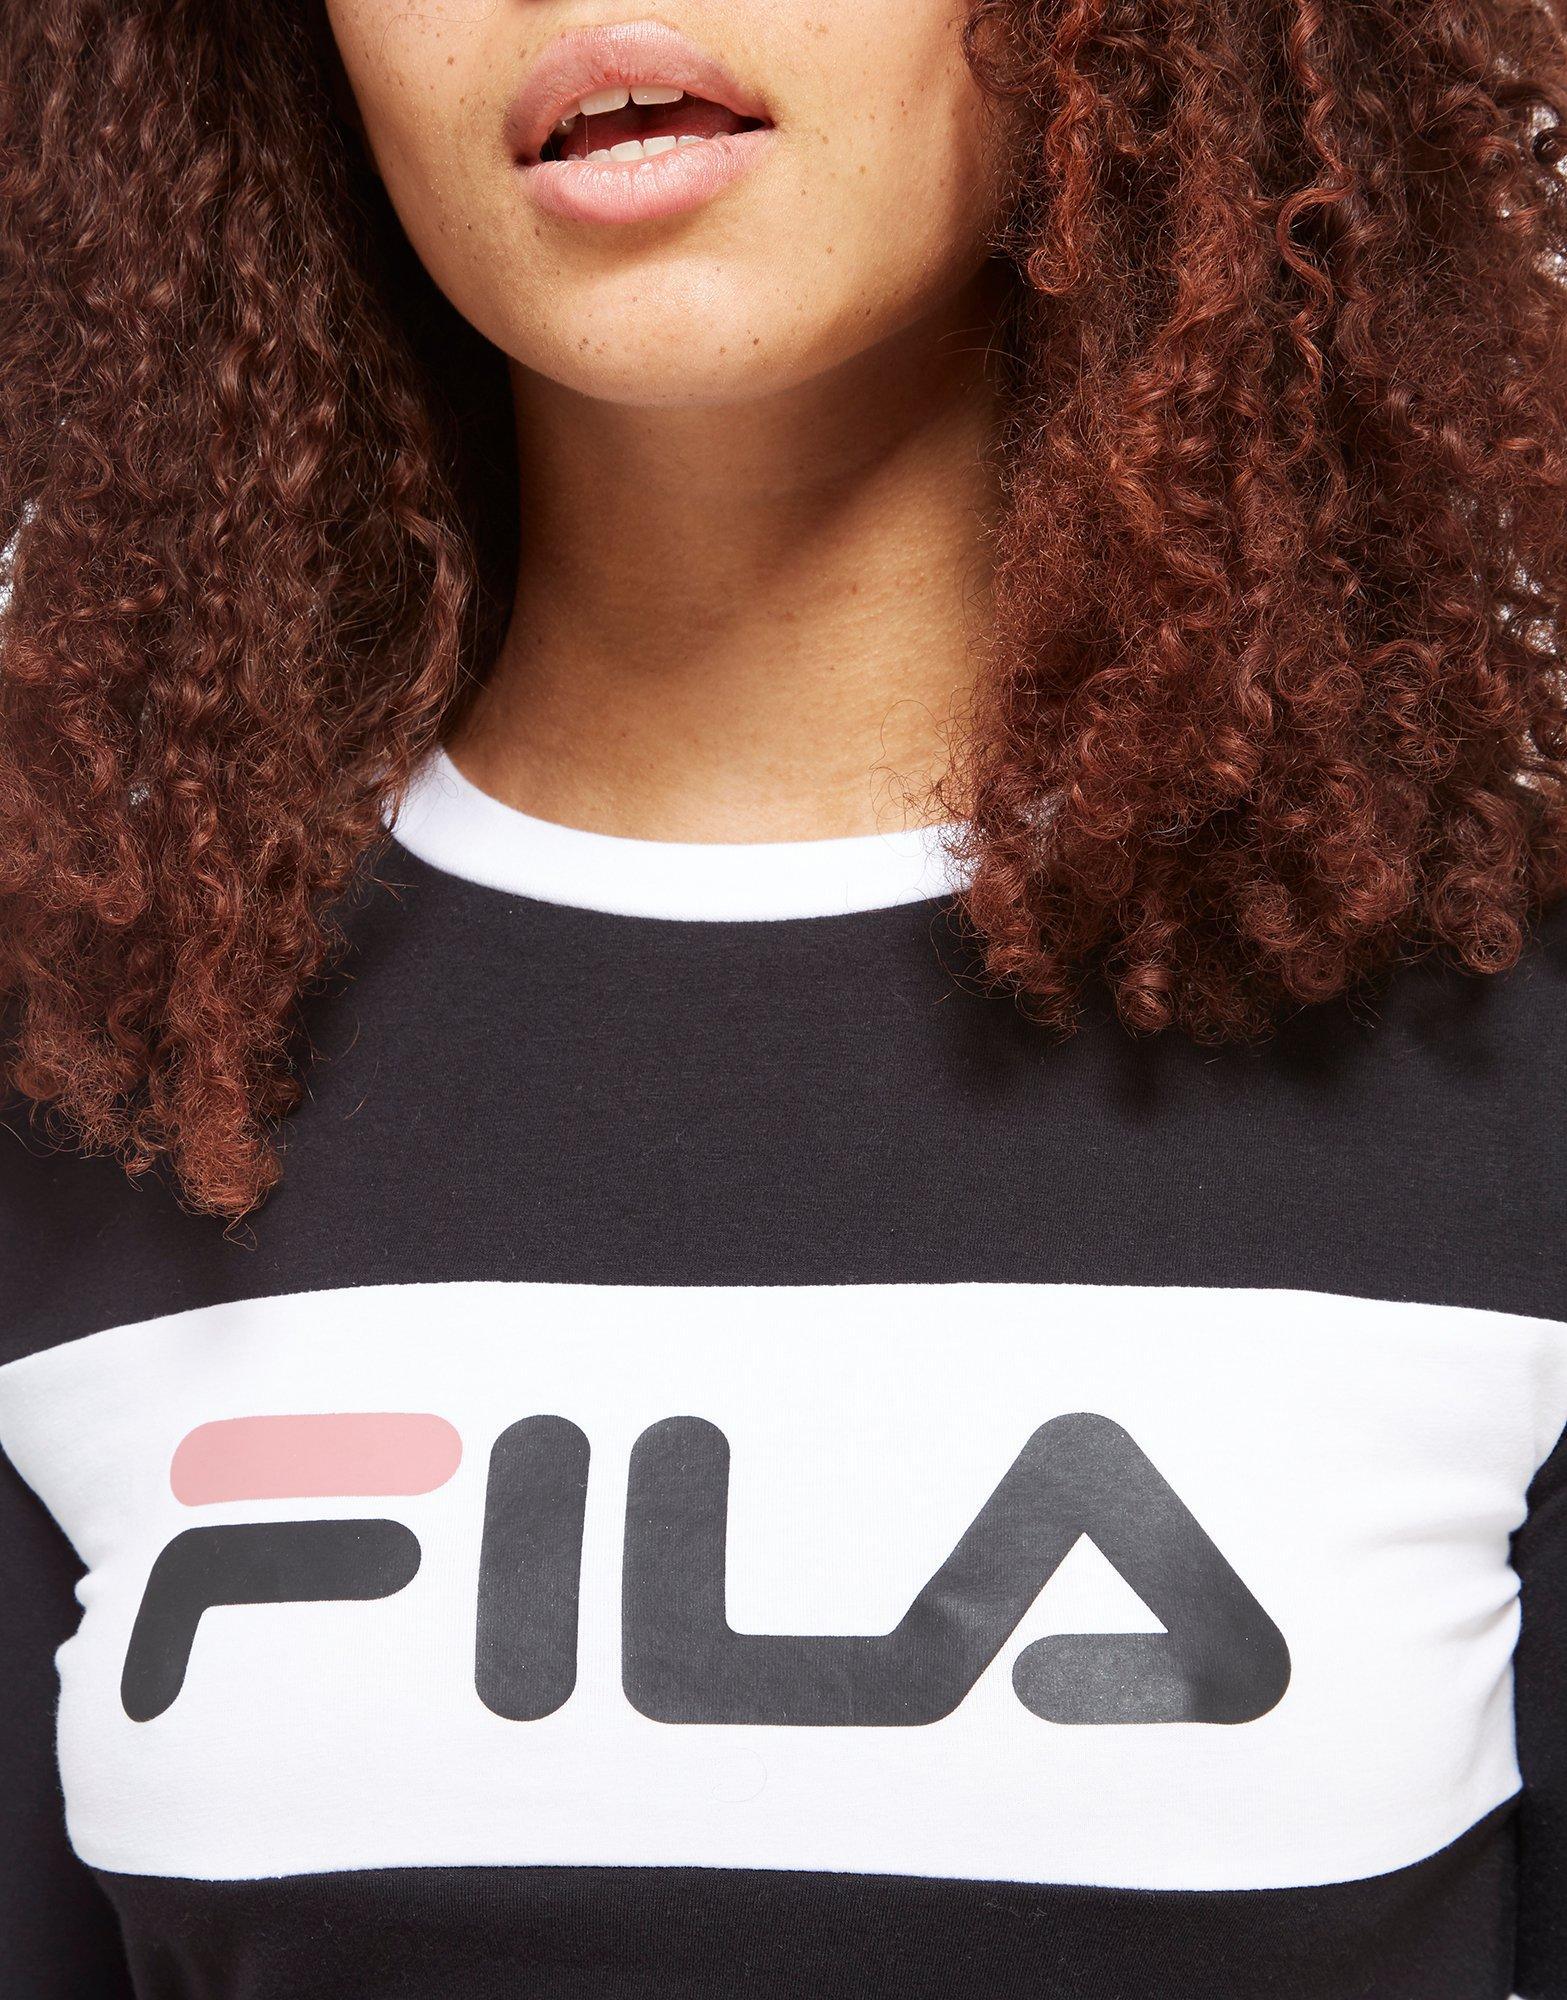 Fila Cotton Paige Panel Crop T-shirt in Black/White (Black) - Lyst